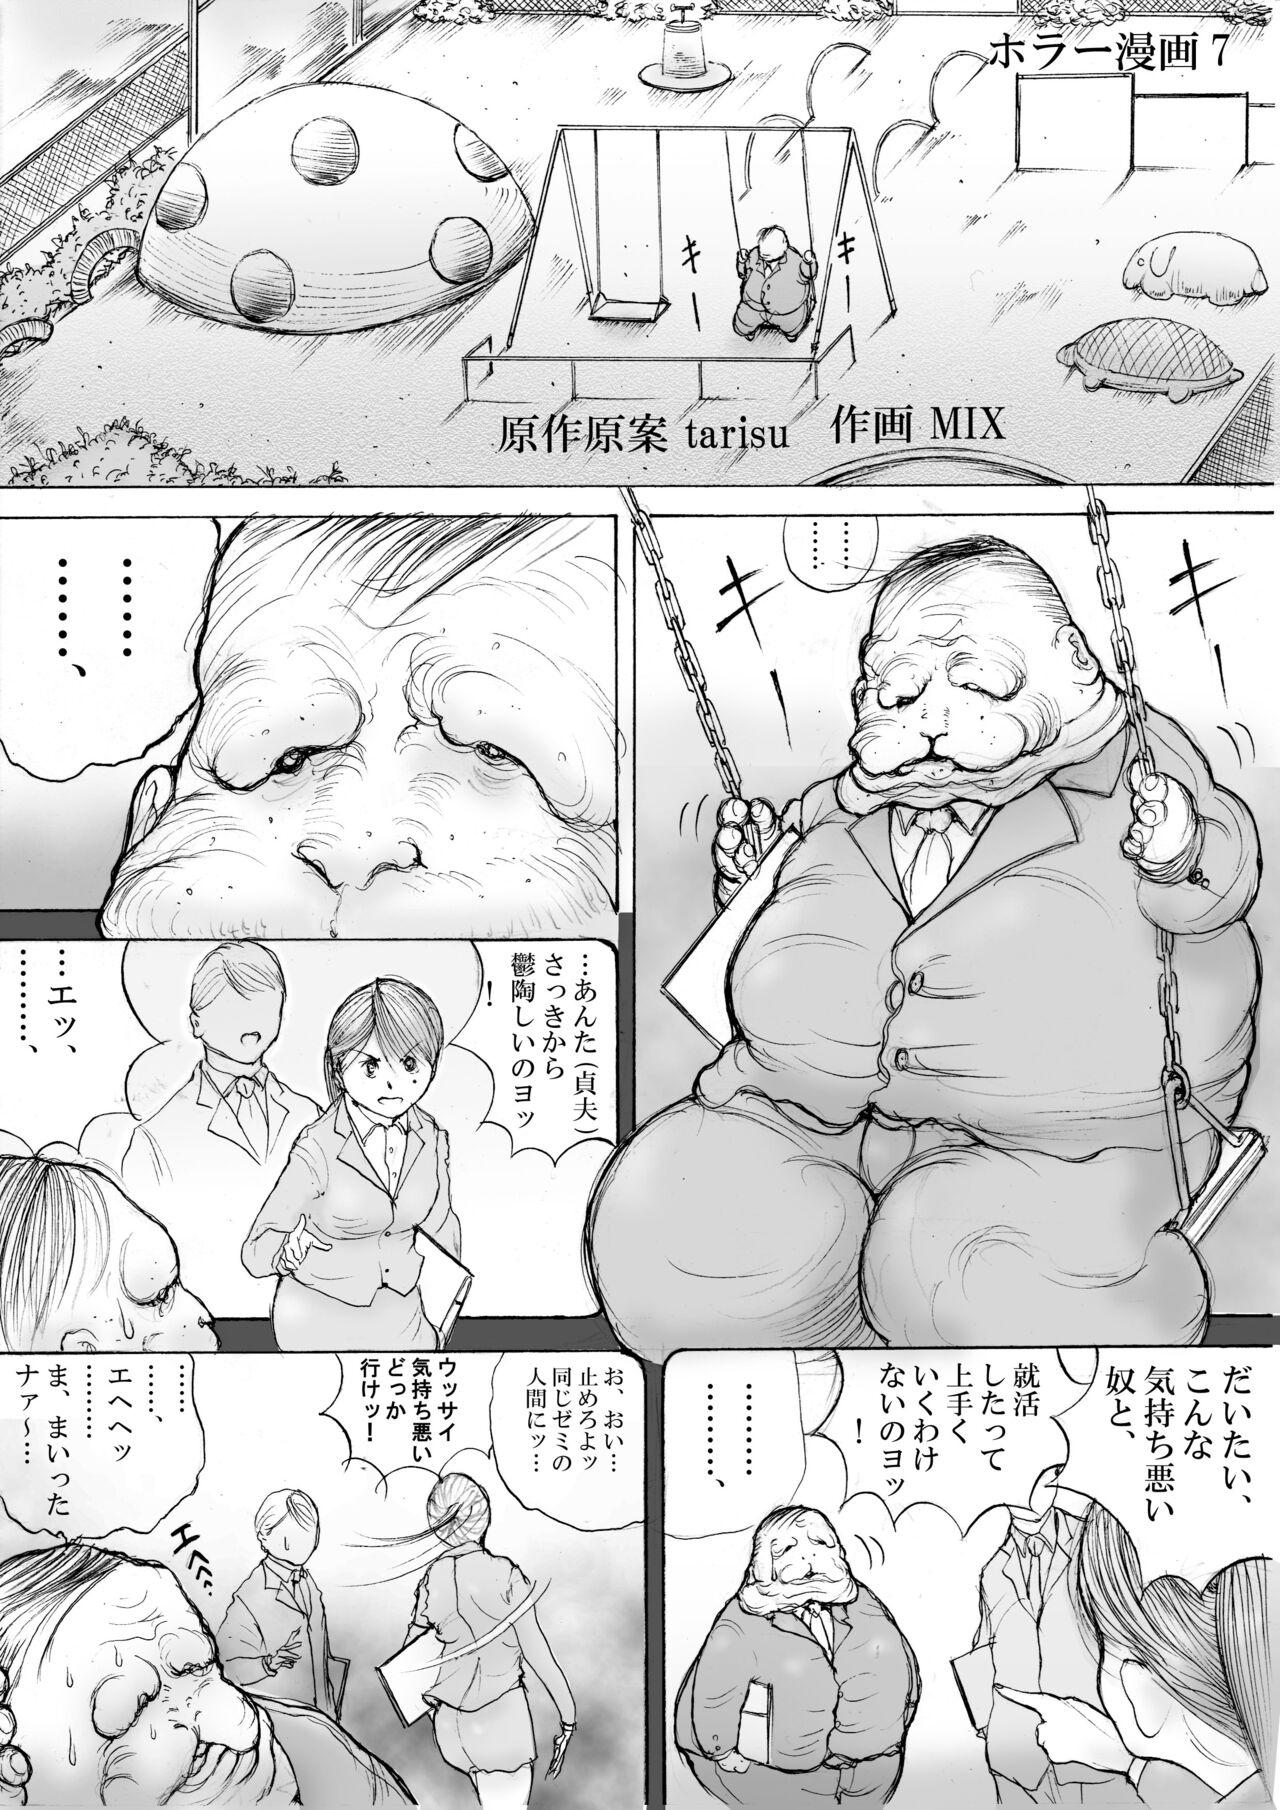 Spy Cam Horror Manga 7 Fucks - Page 1